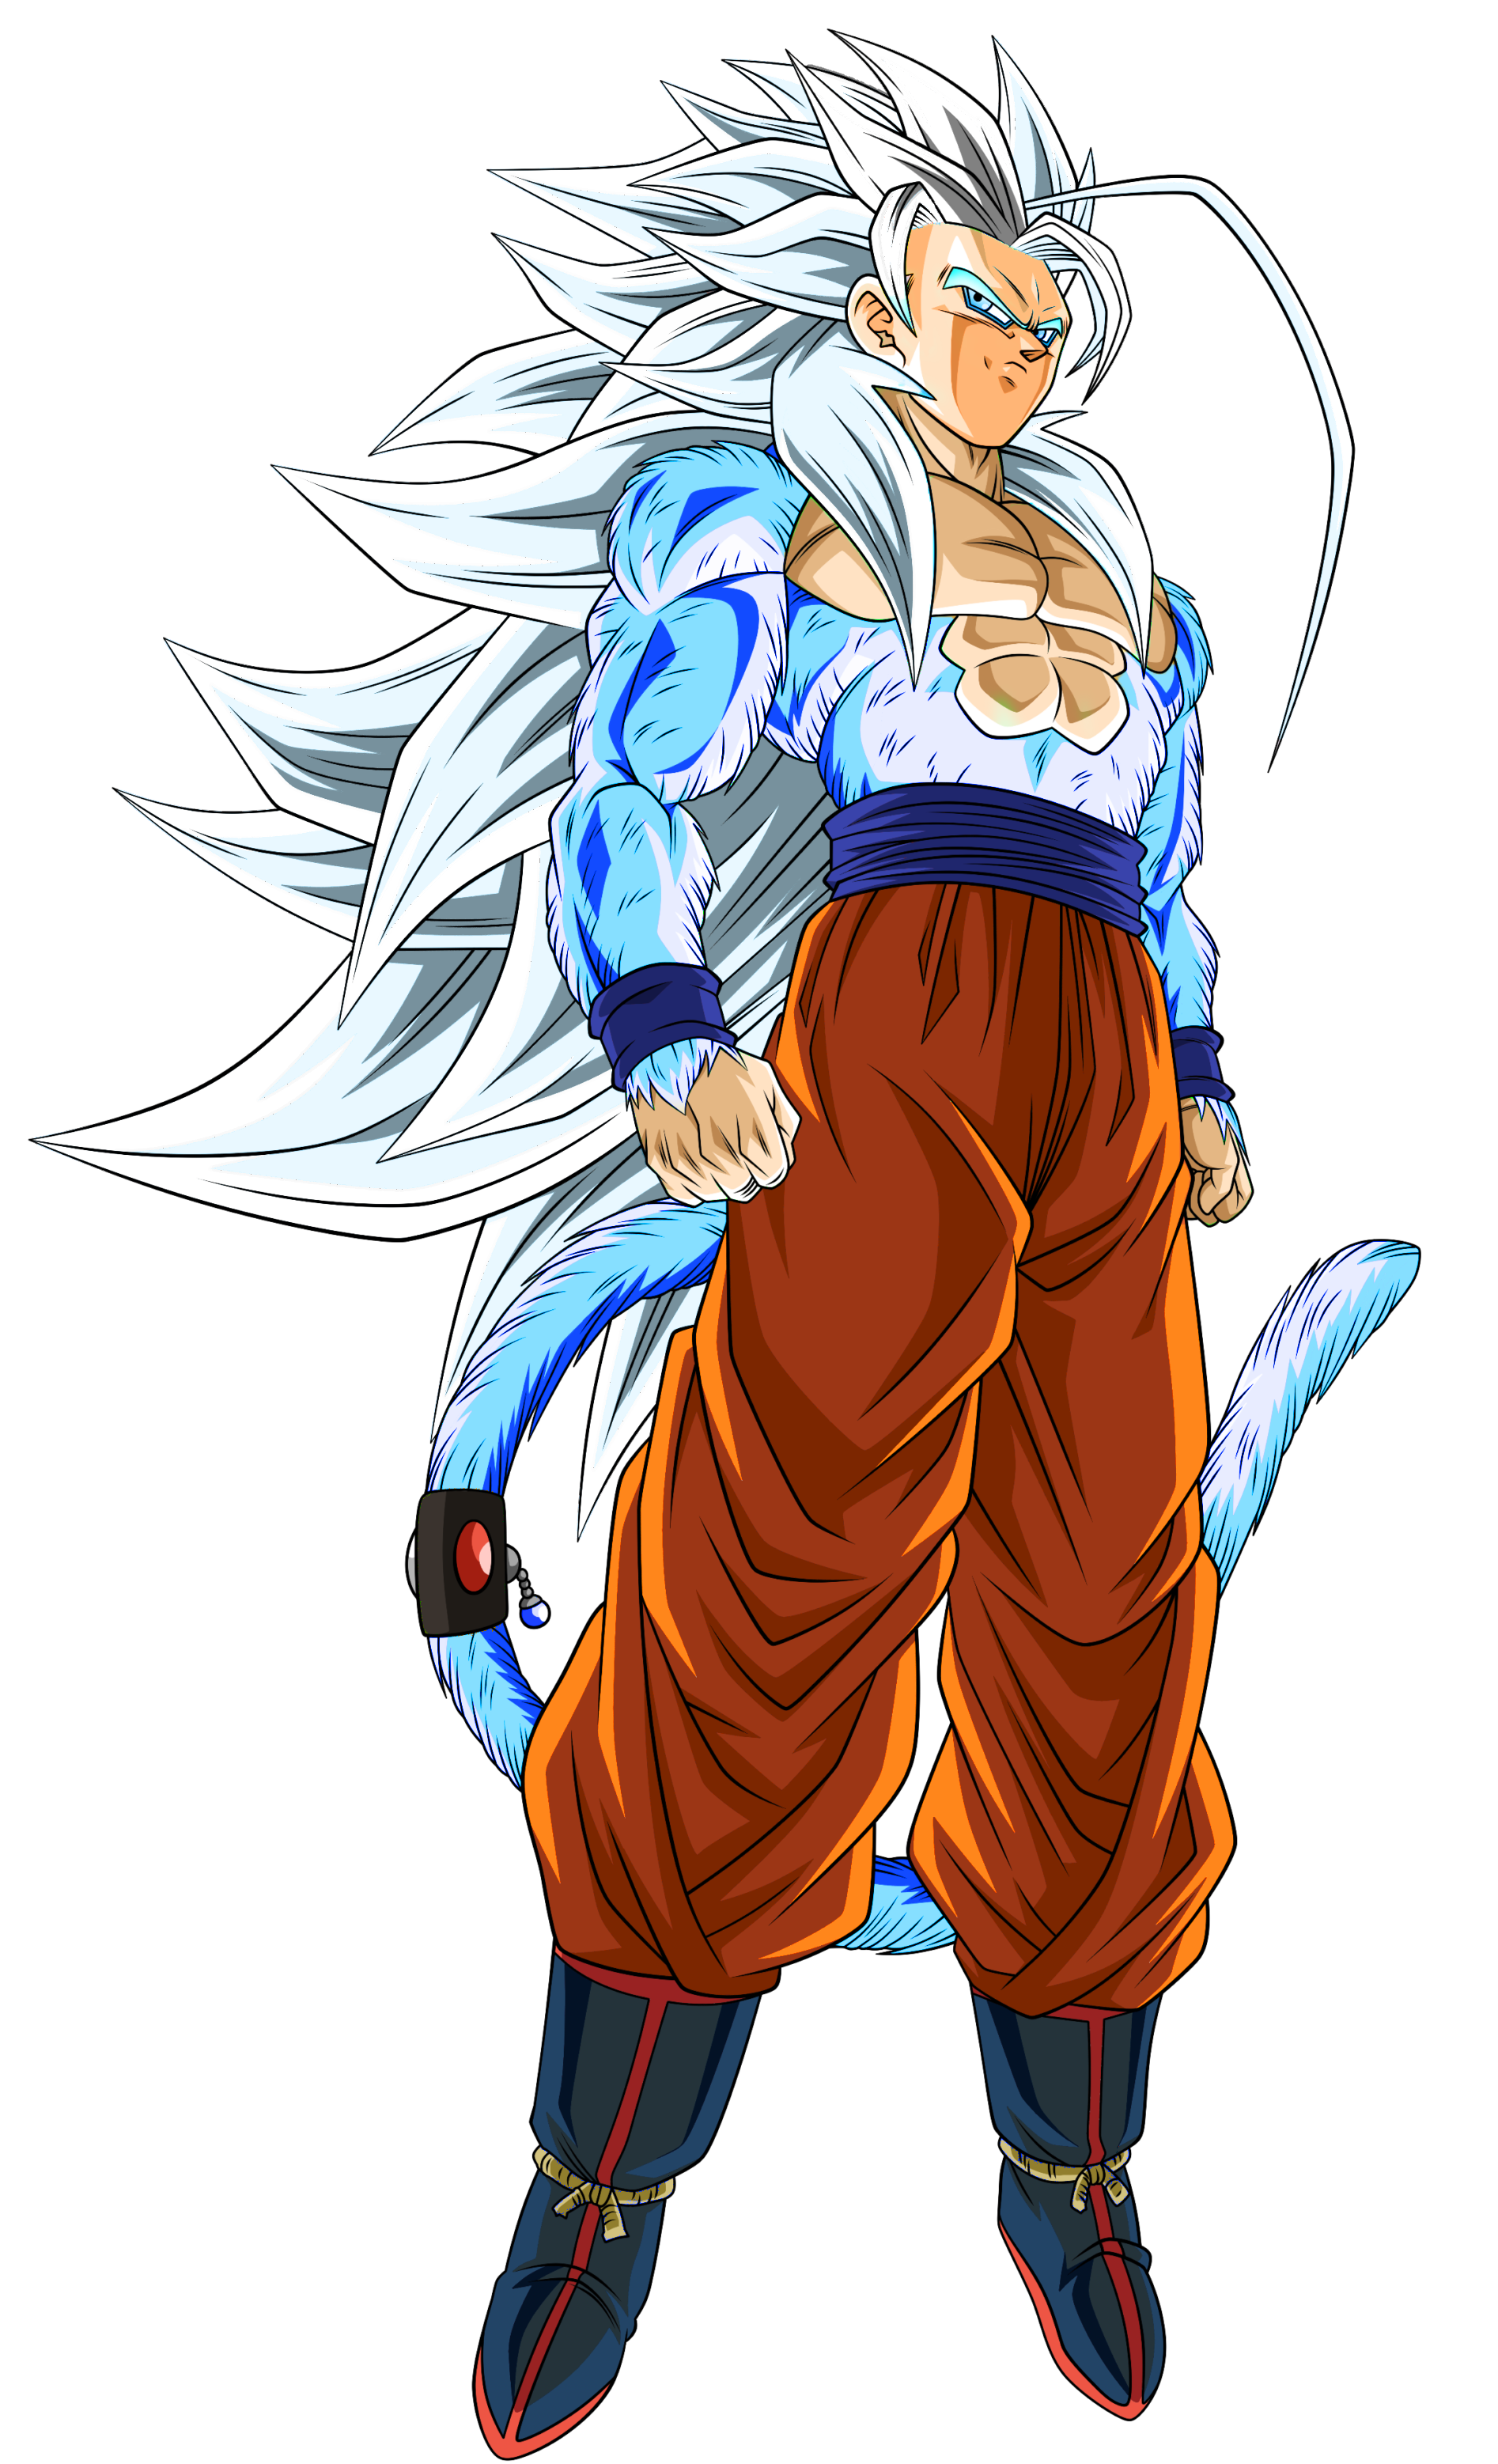 Goku Super Saiyan 5 by ChronoFz on DeviantArt